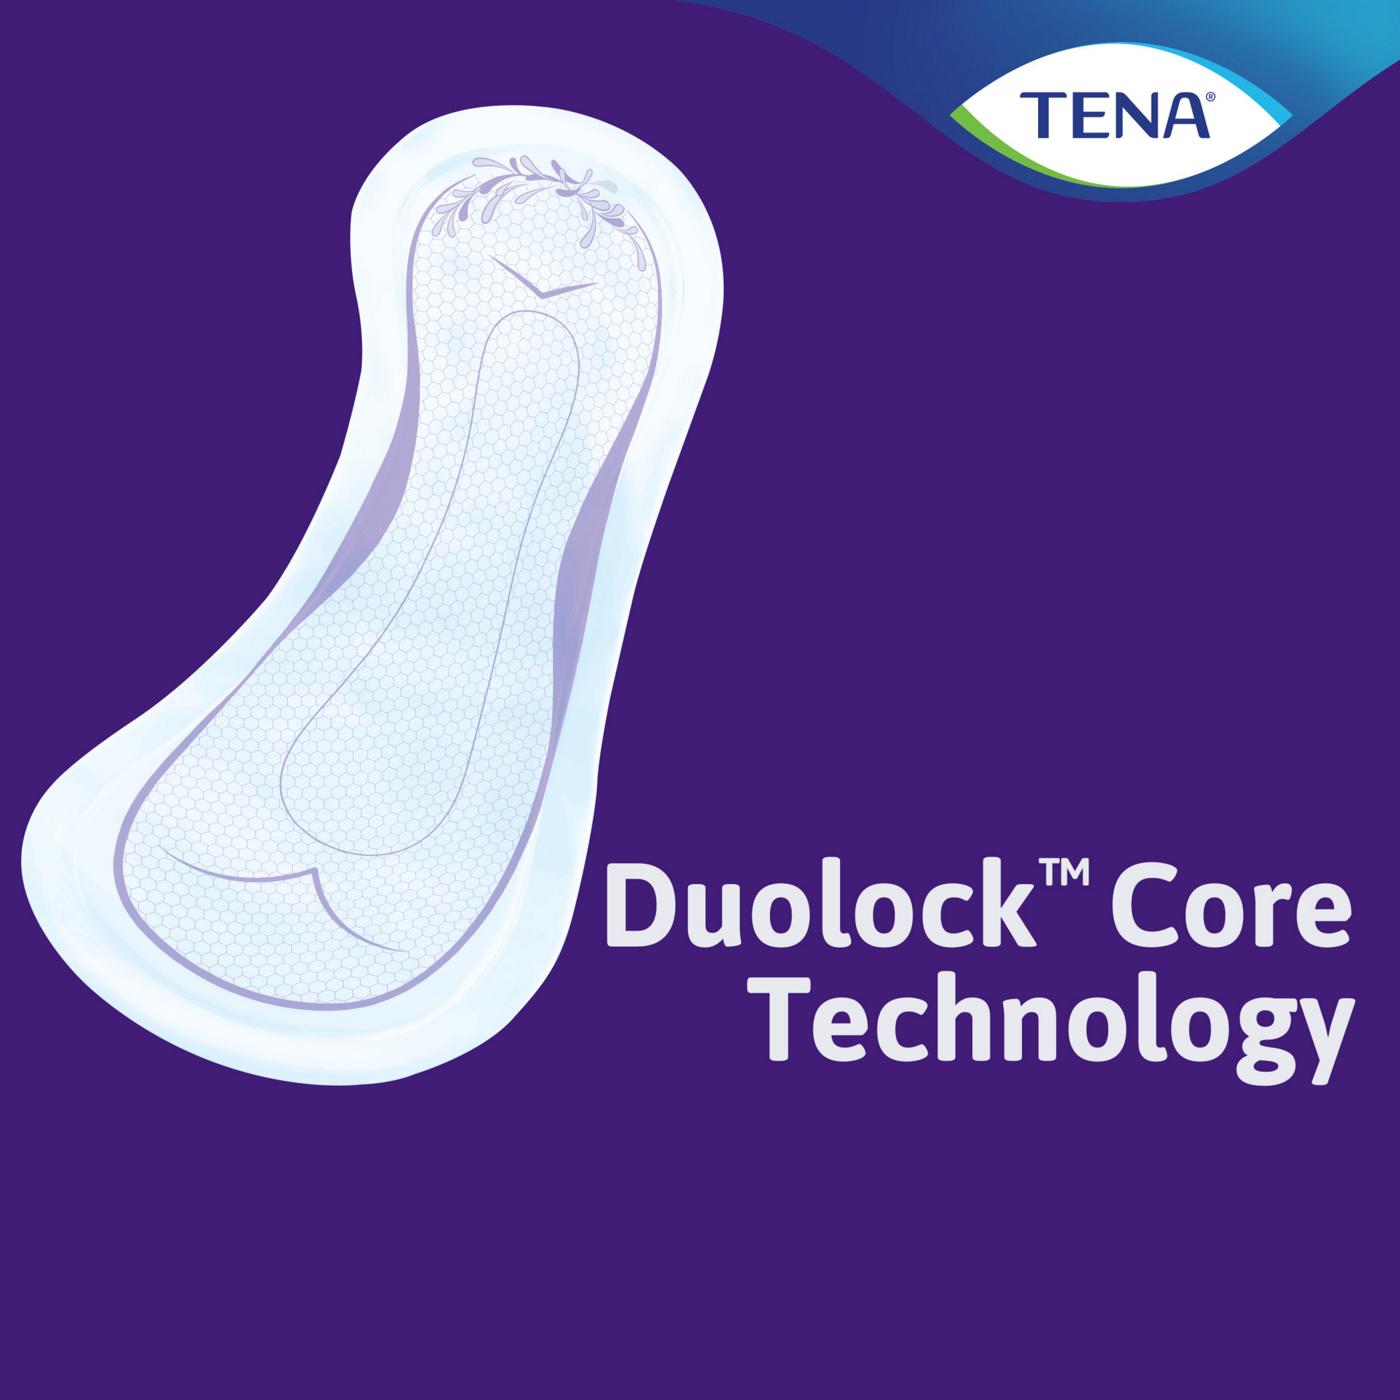 TENA Sensitive Care Extra Coverage Overnight pads